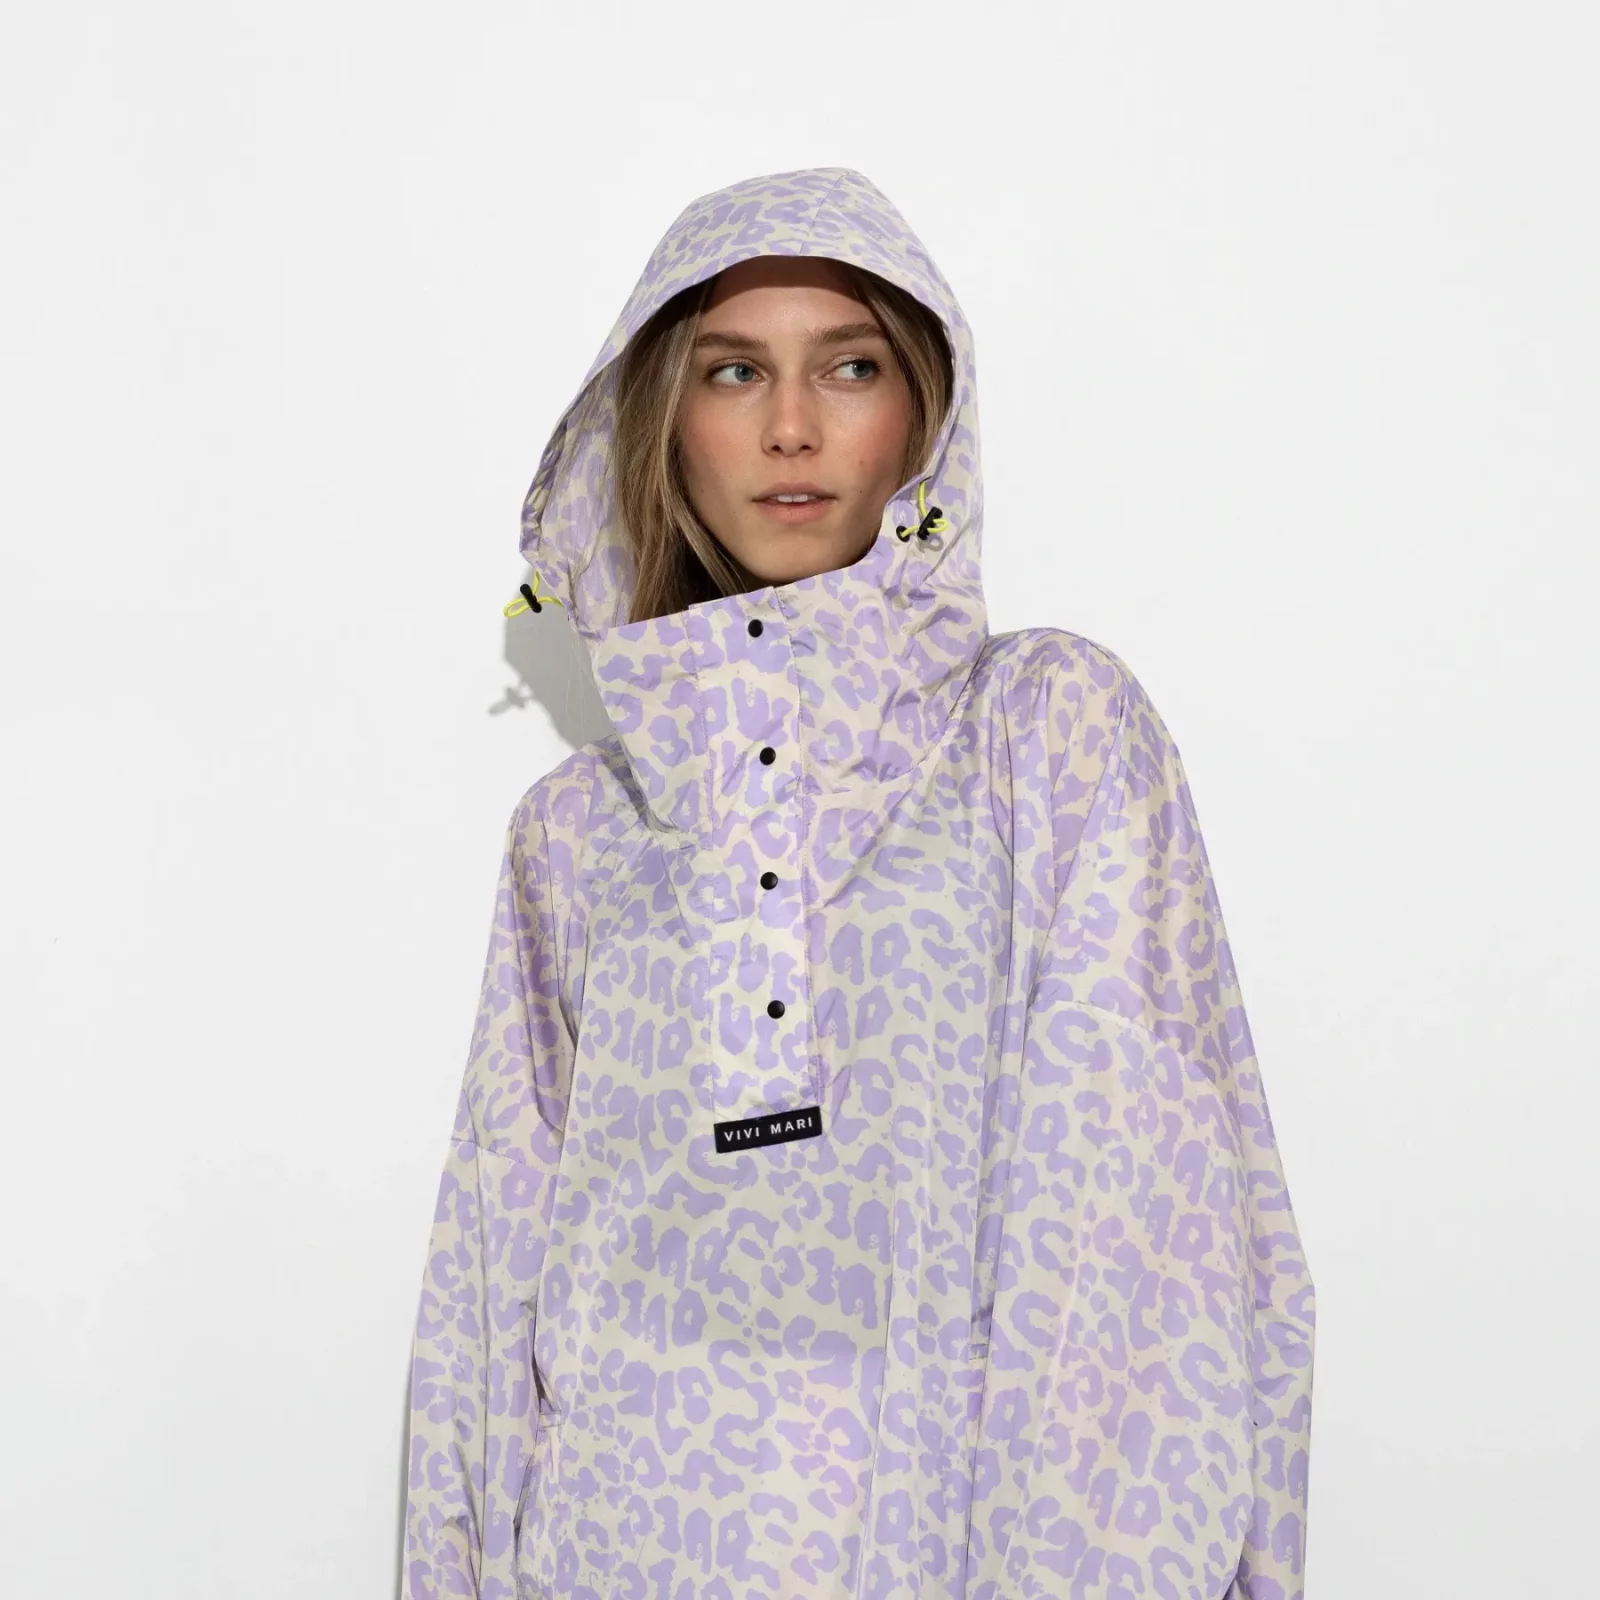 VIVI MARI - Raincoat leo splashes lavender/grey 4